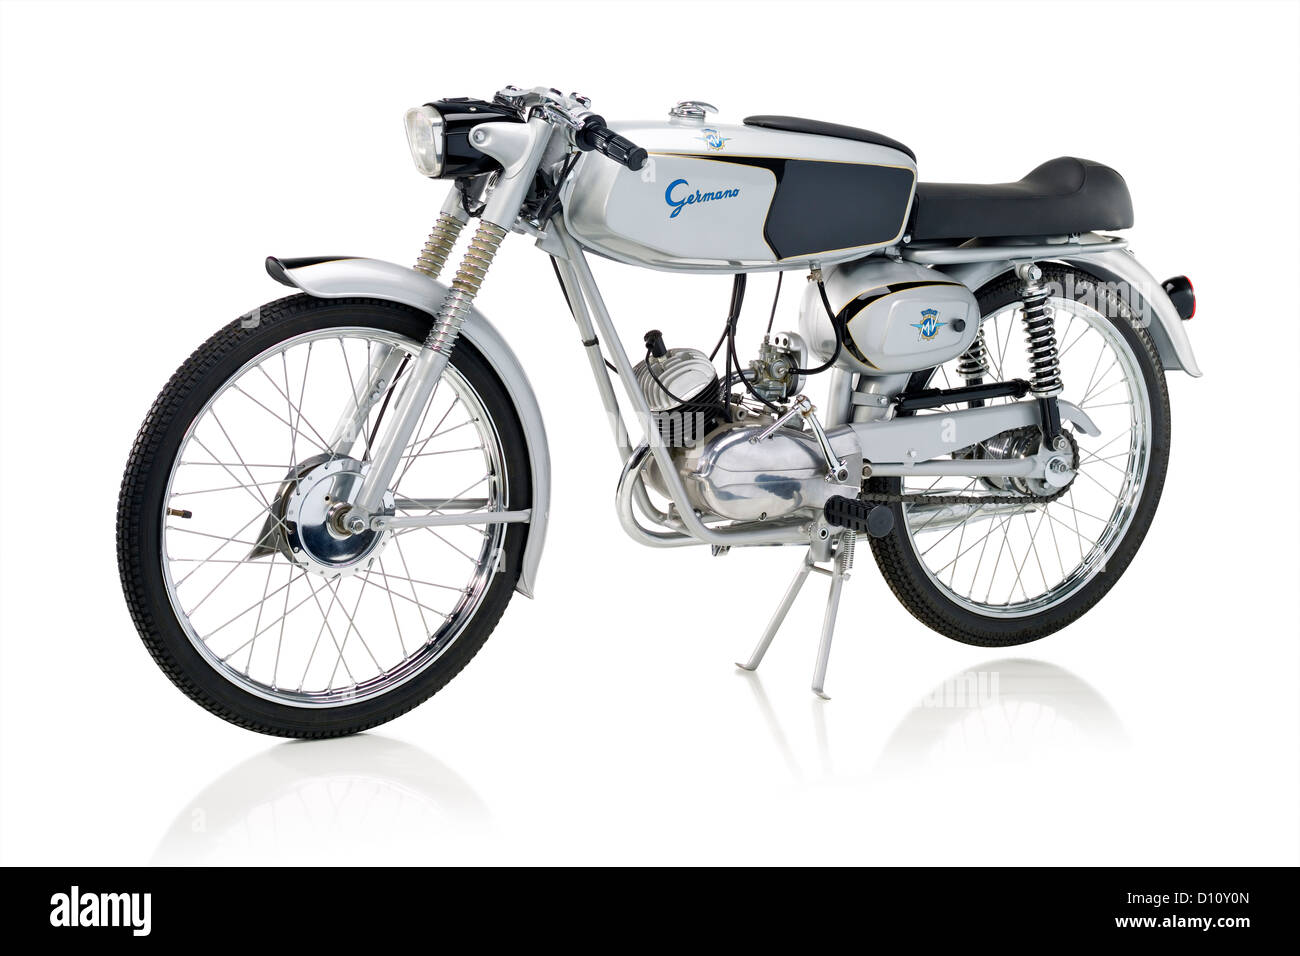 1966 MV Agusta Germano Sport motorcycle Stock Photo